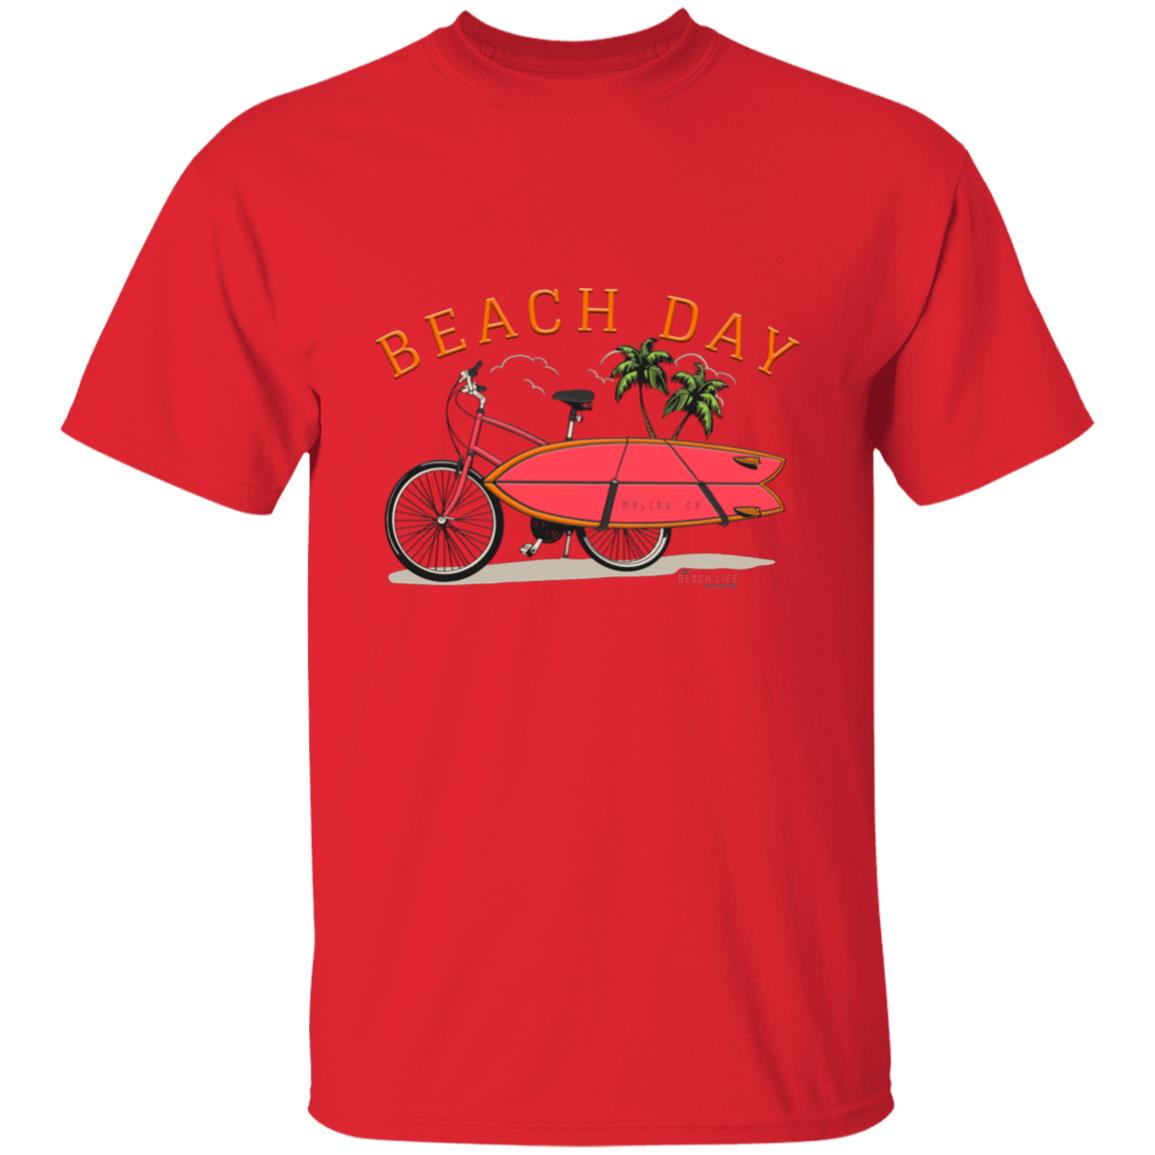 BeachLife809 T-Shirt